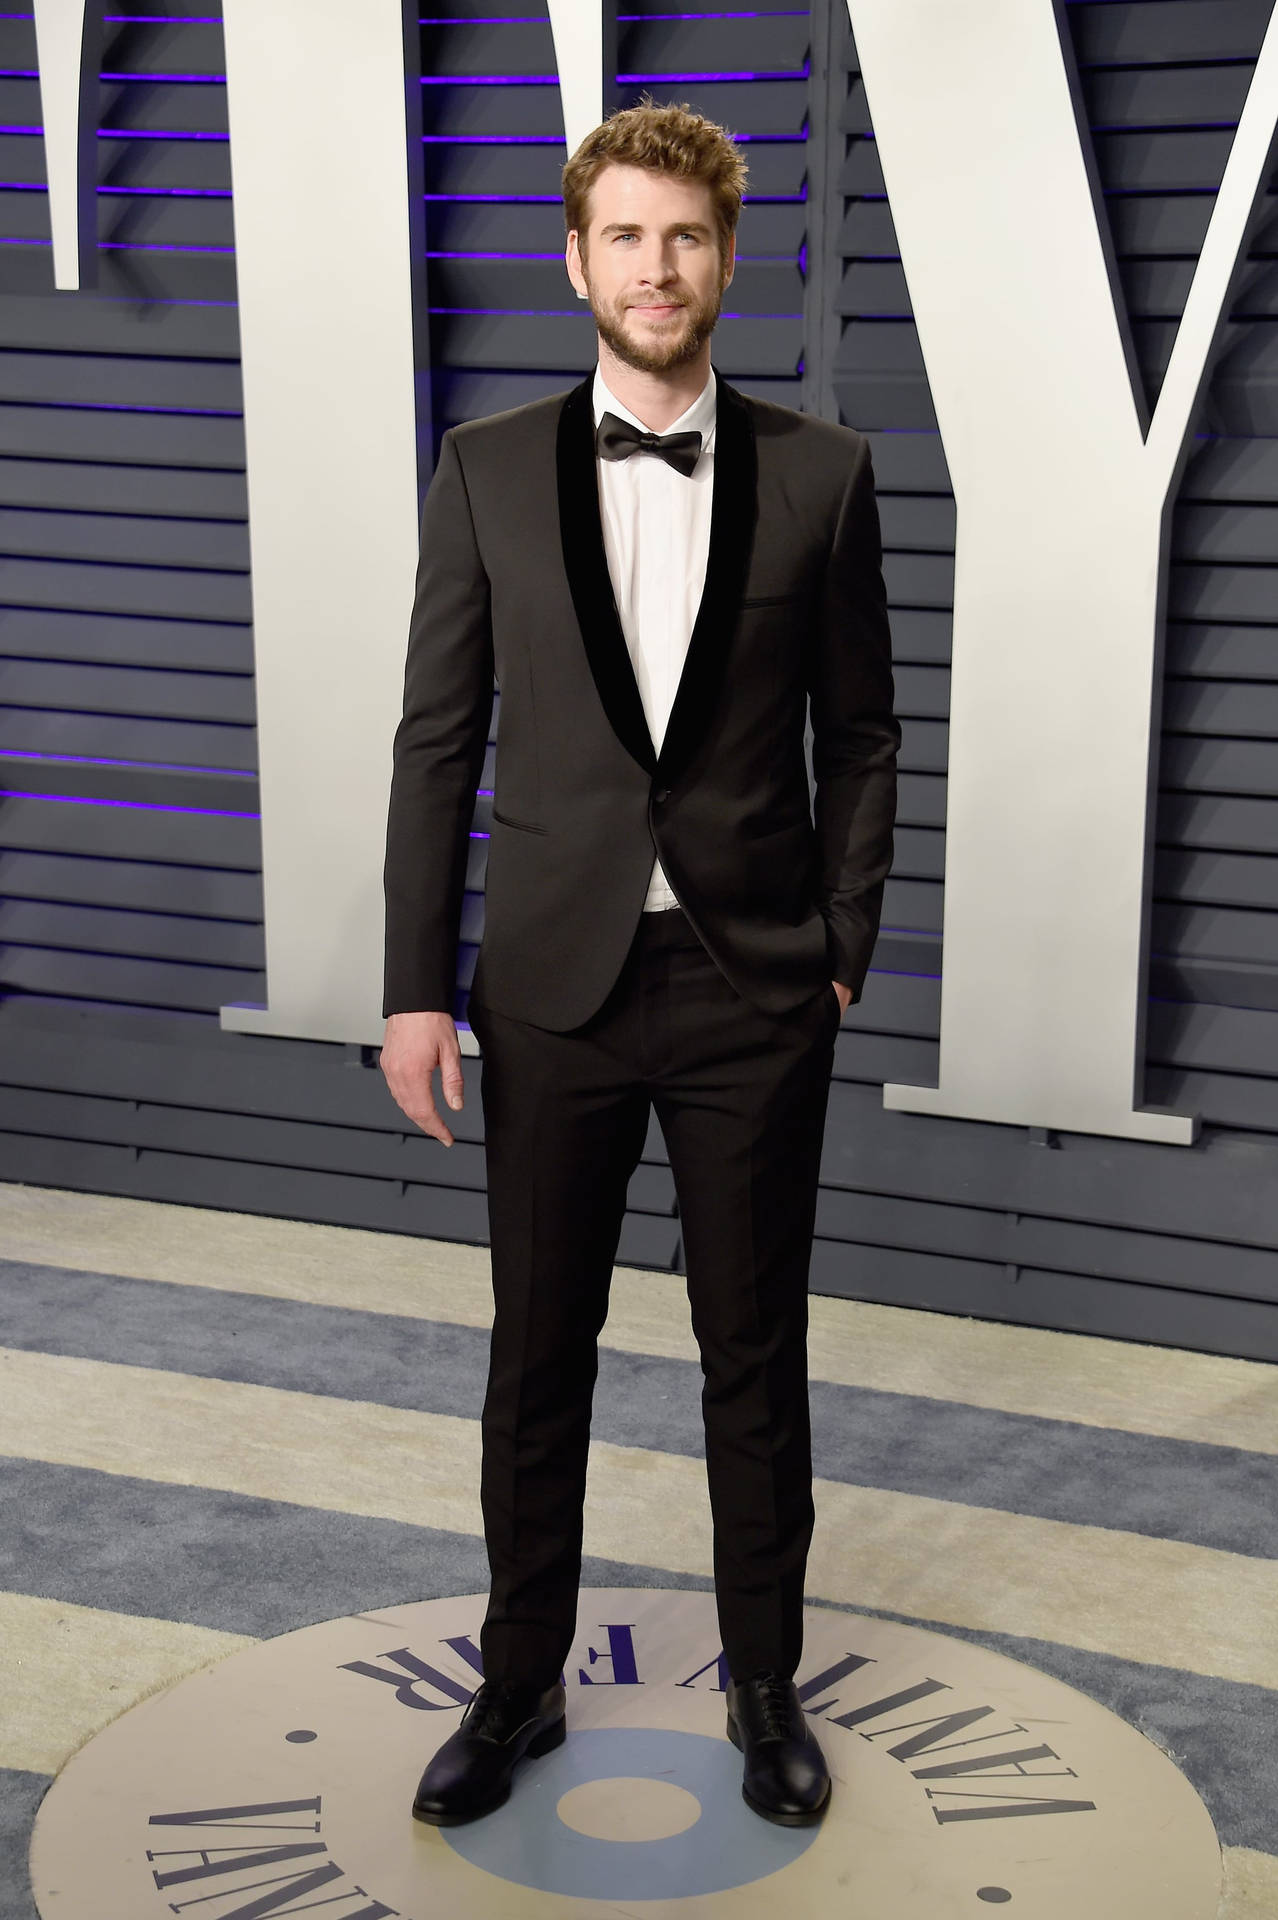 Liam Hemsworth Suit And Tie Background